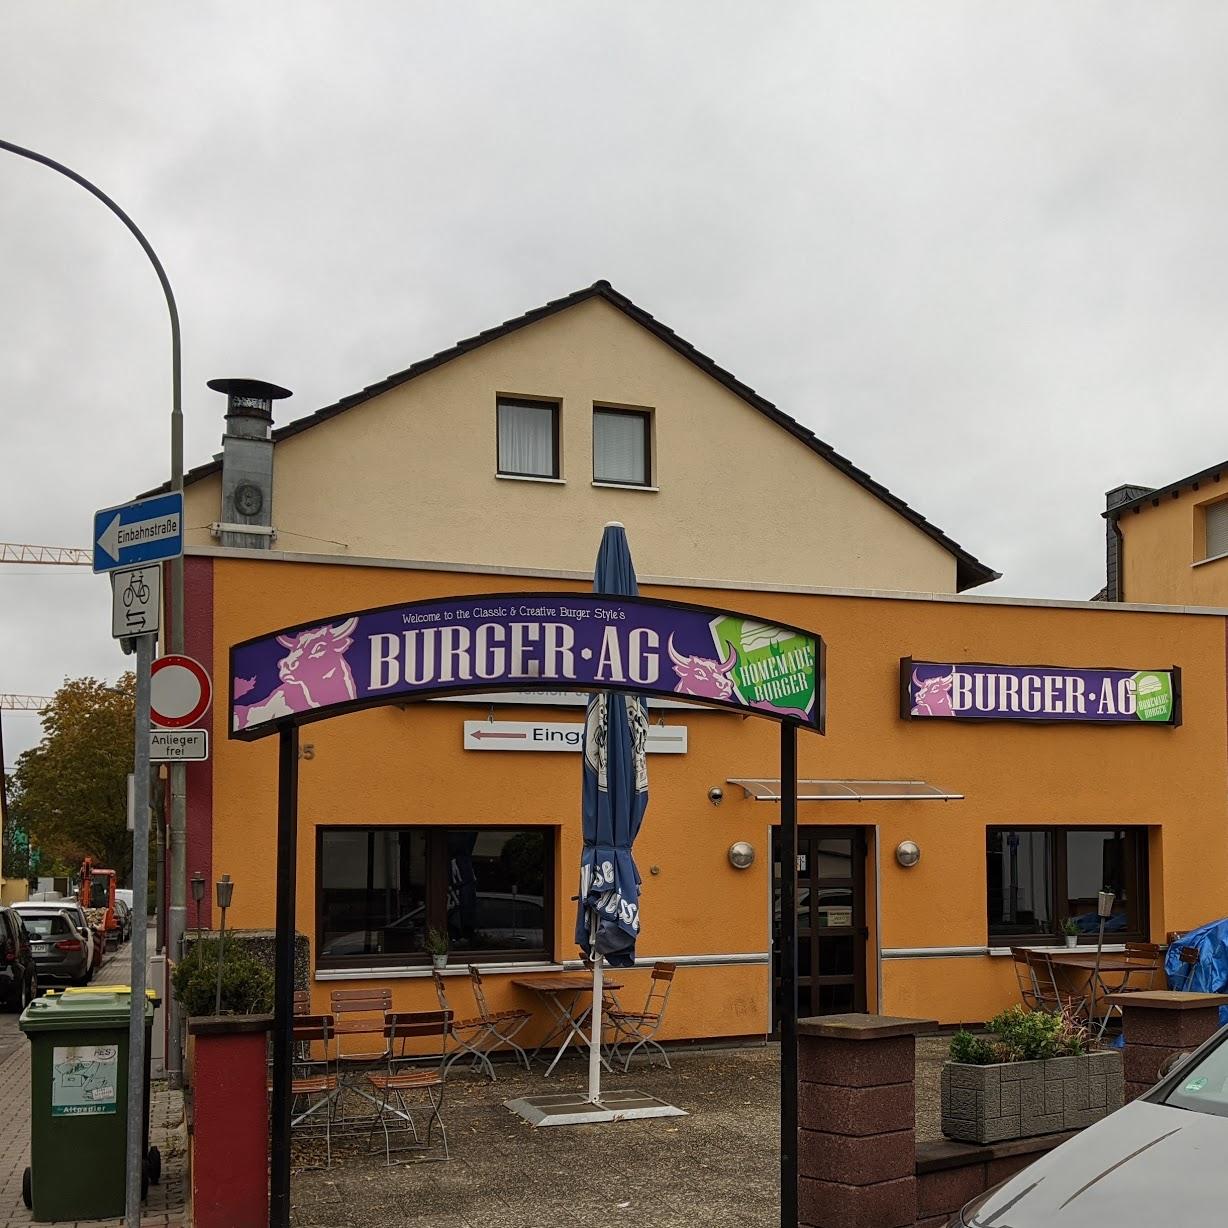 Restaurant "Burger AG" in Frankfurt am Main